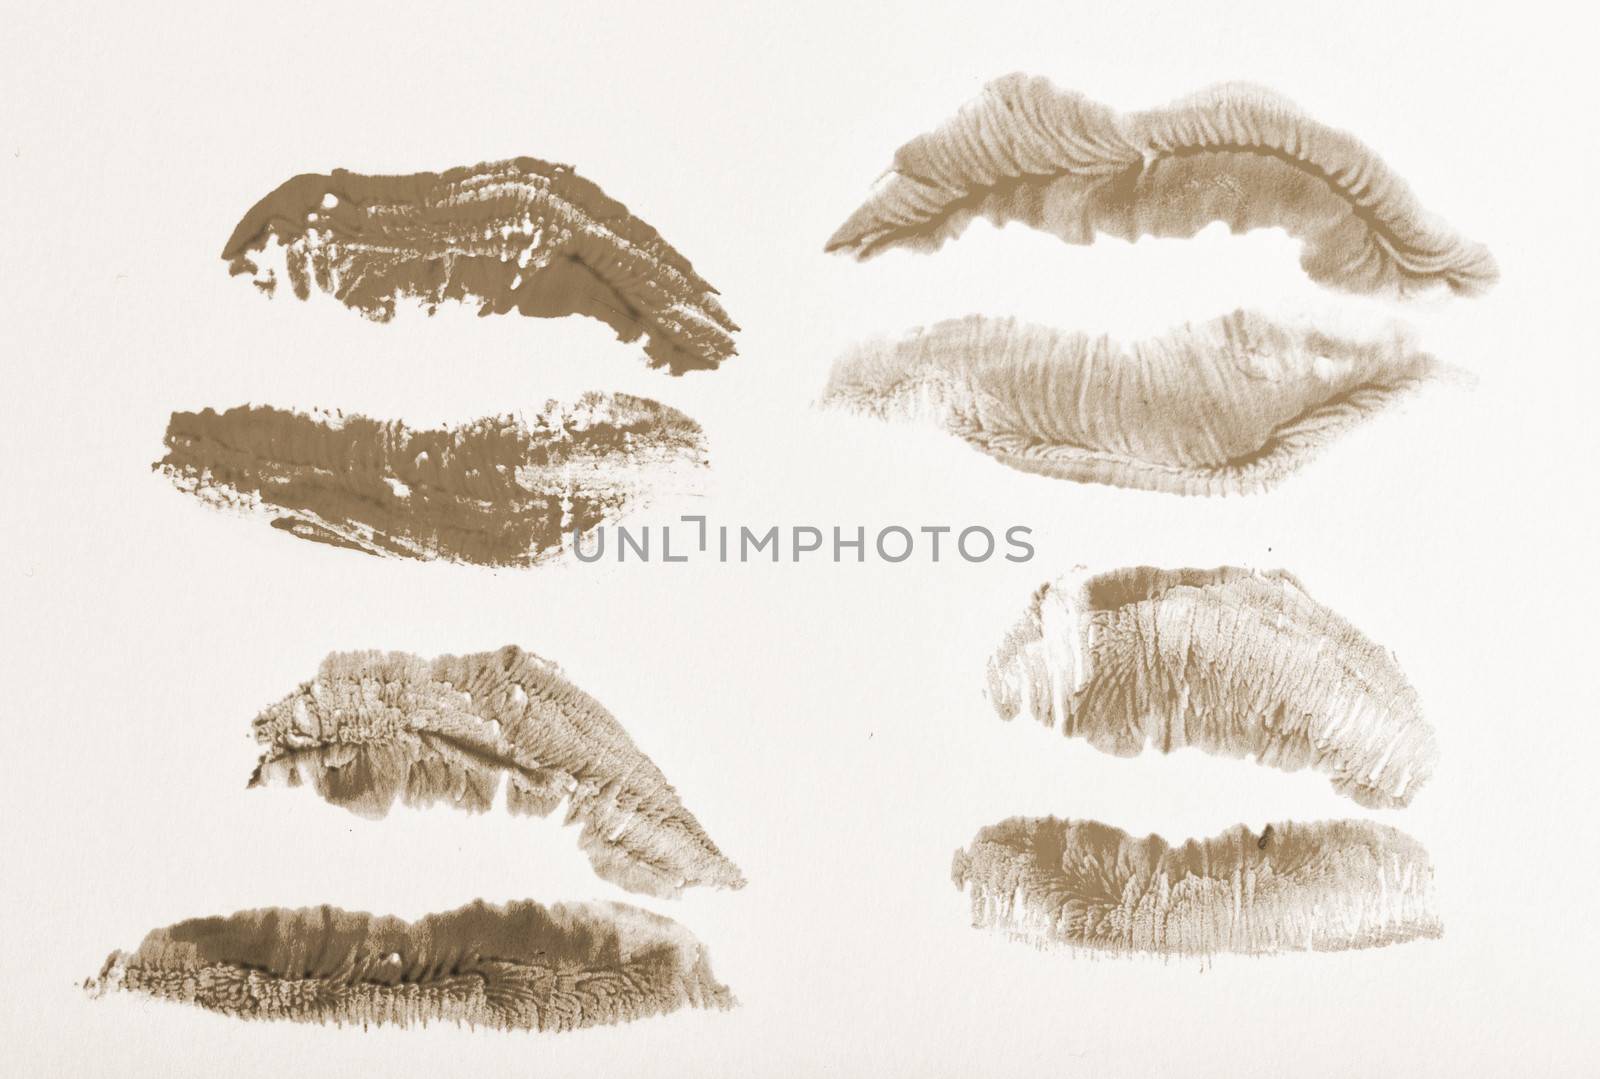 Imprint of lipstick passionate female lips closeup shot